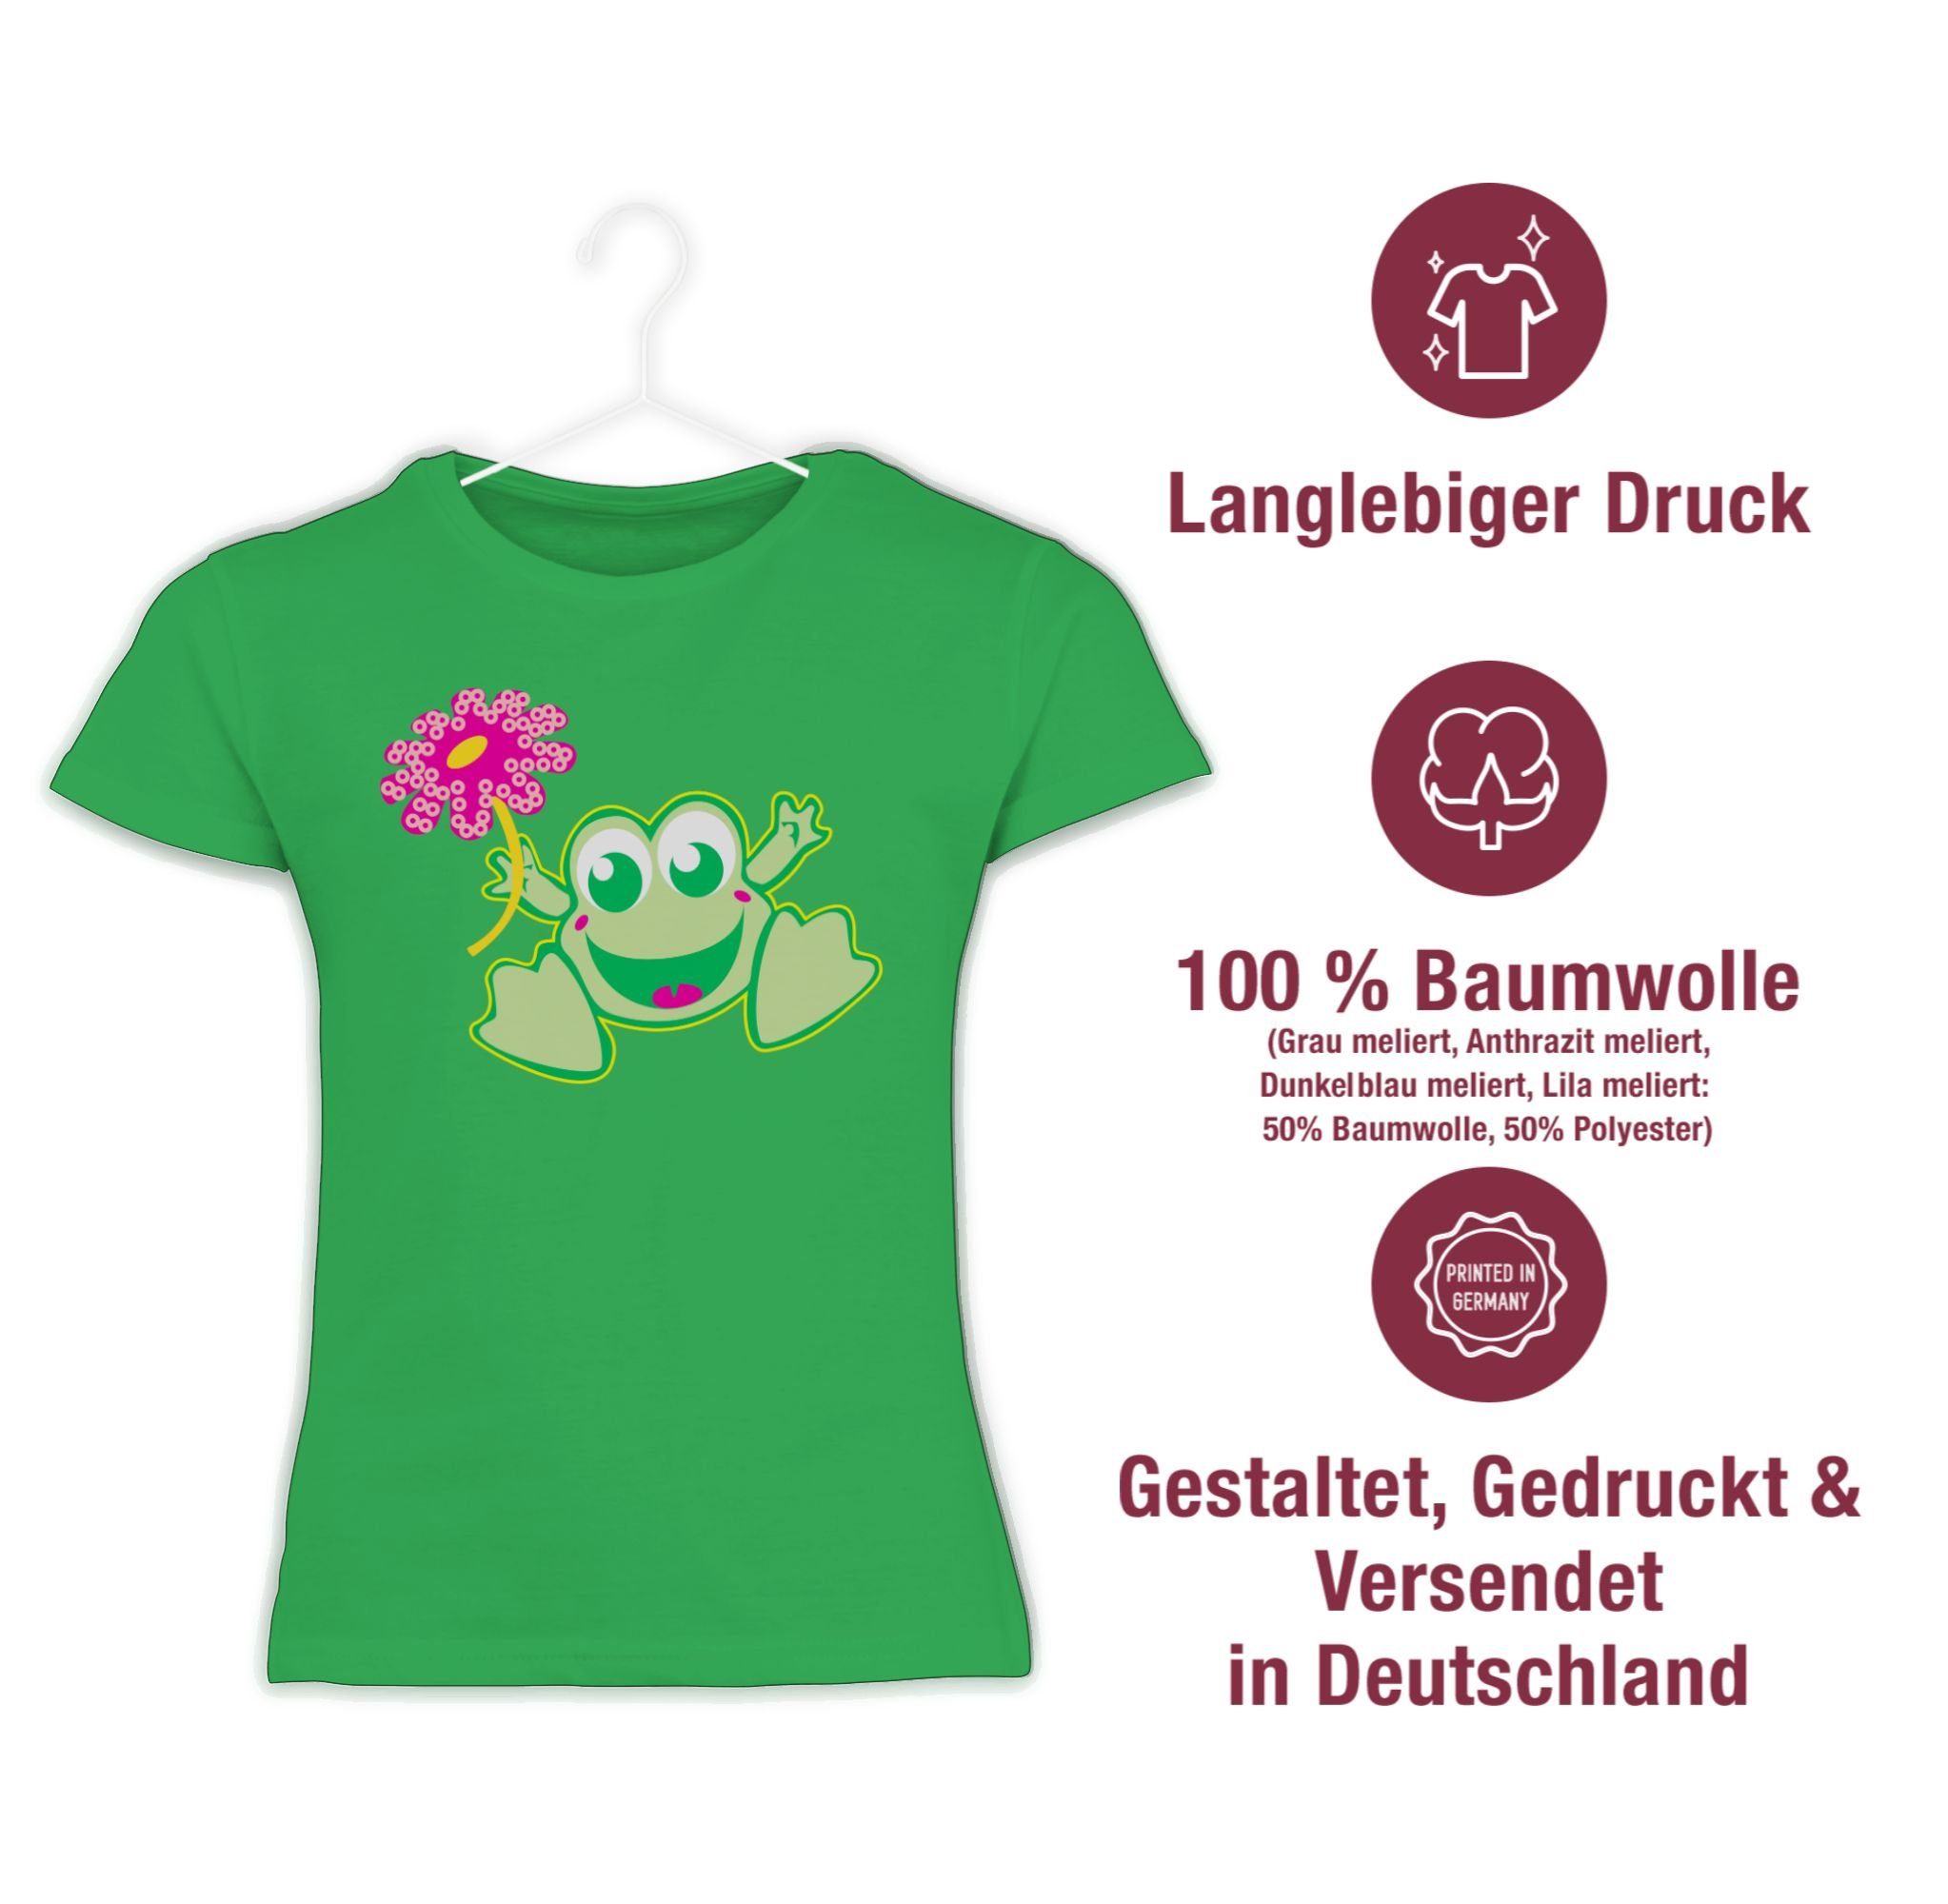 Shirtracer mit Blume 1 Frosch Kindermotive Grün T-Shirt